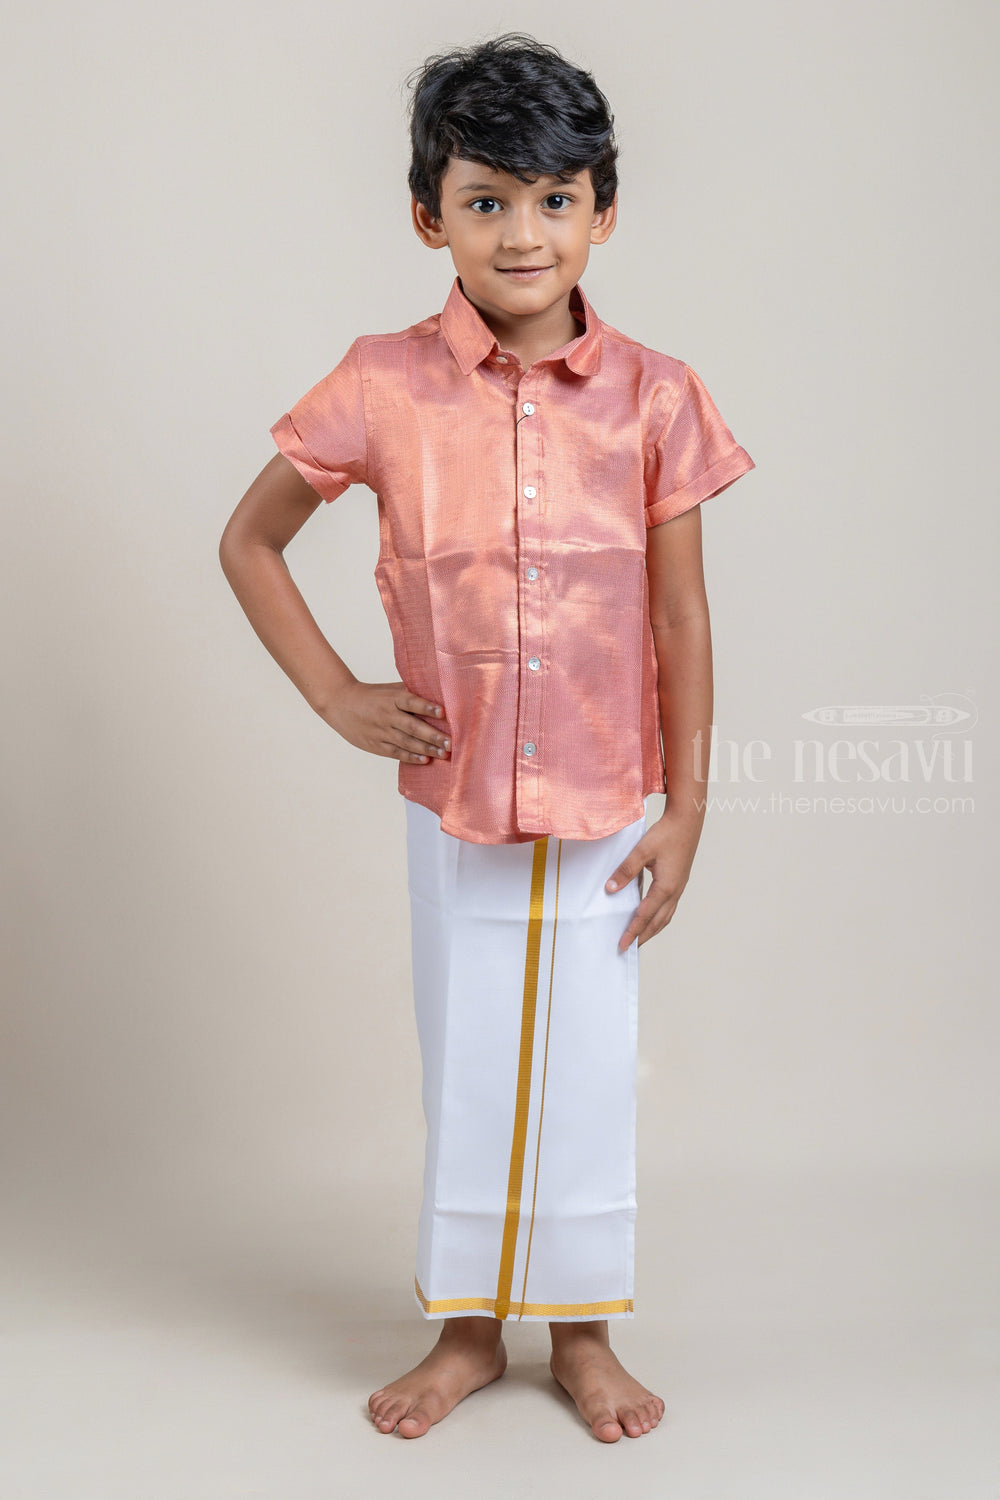 The Nesavu Boys Shirts Baby Pink Delight Little Maharaja Pattu Silk Shirt psr silks Nesavu 14 (6M) / Salmon BS033